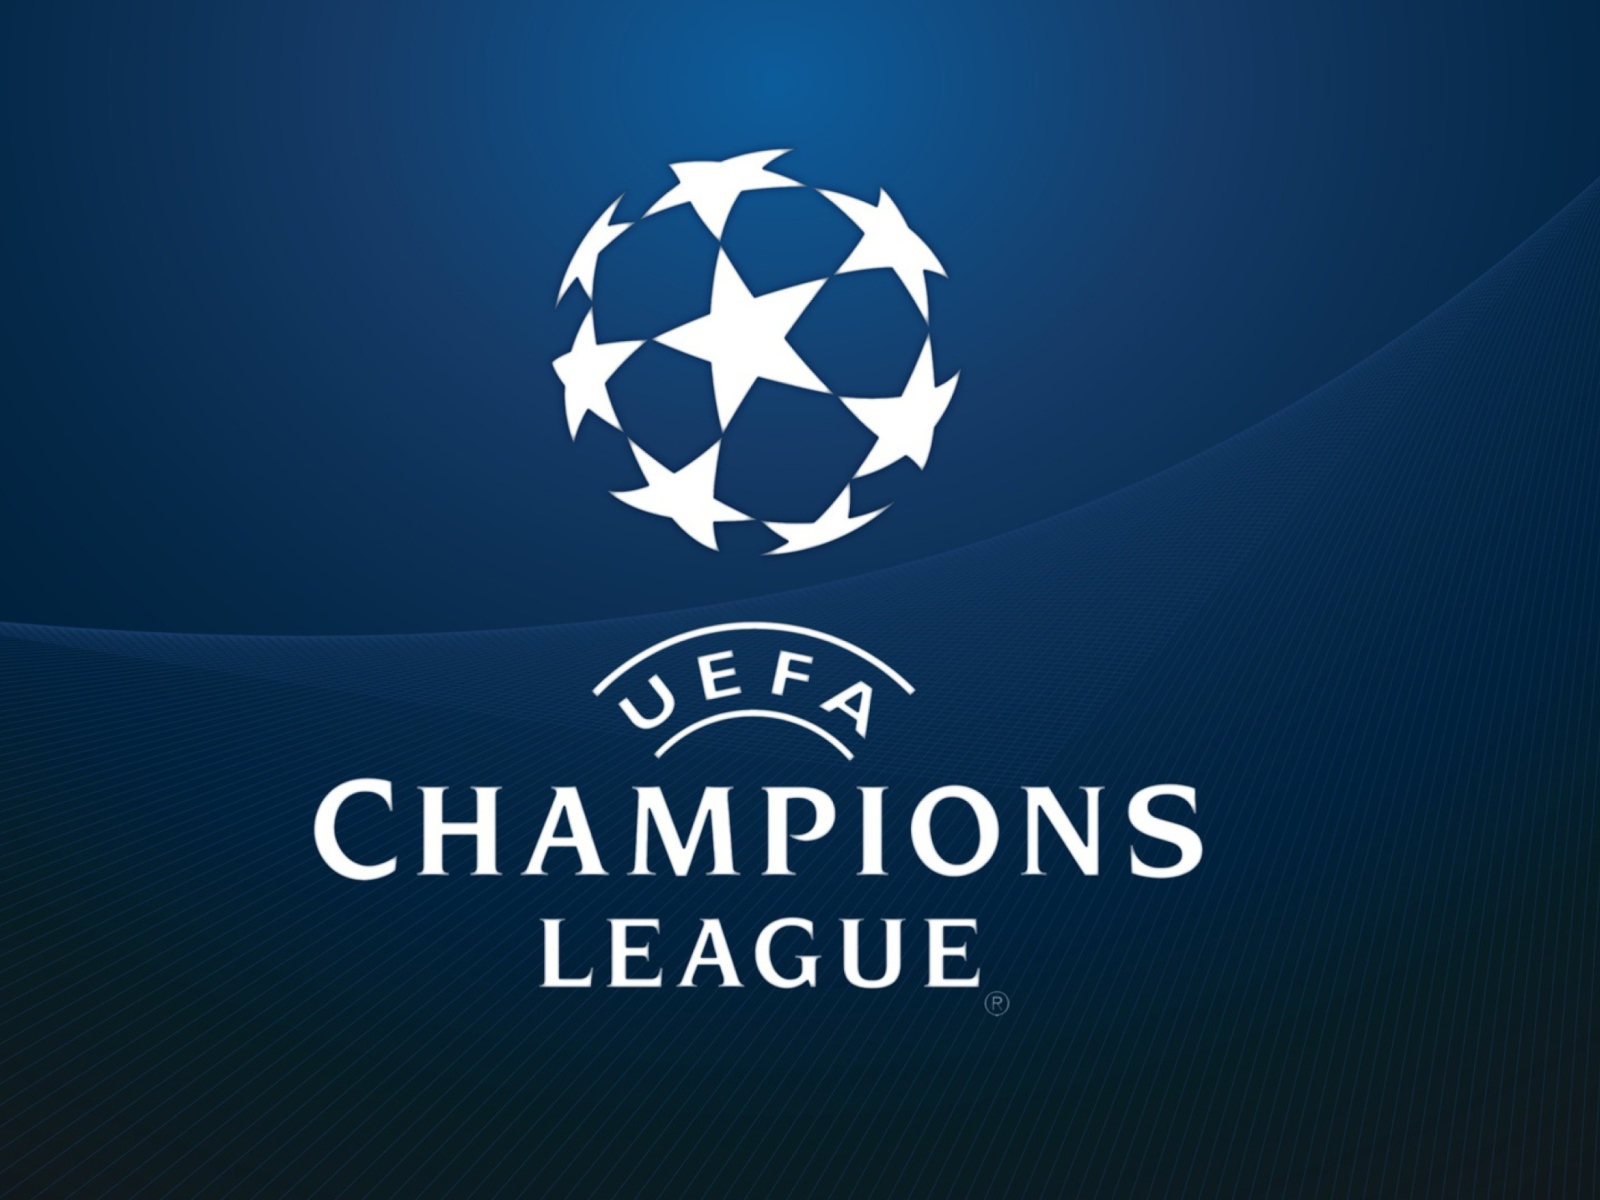 Uefa Champions League wallpaper 1600x1200